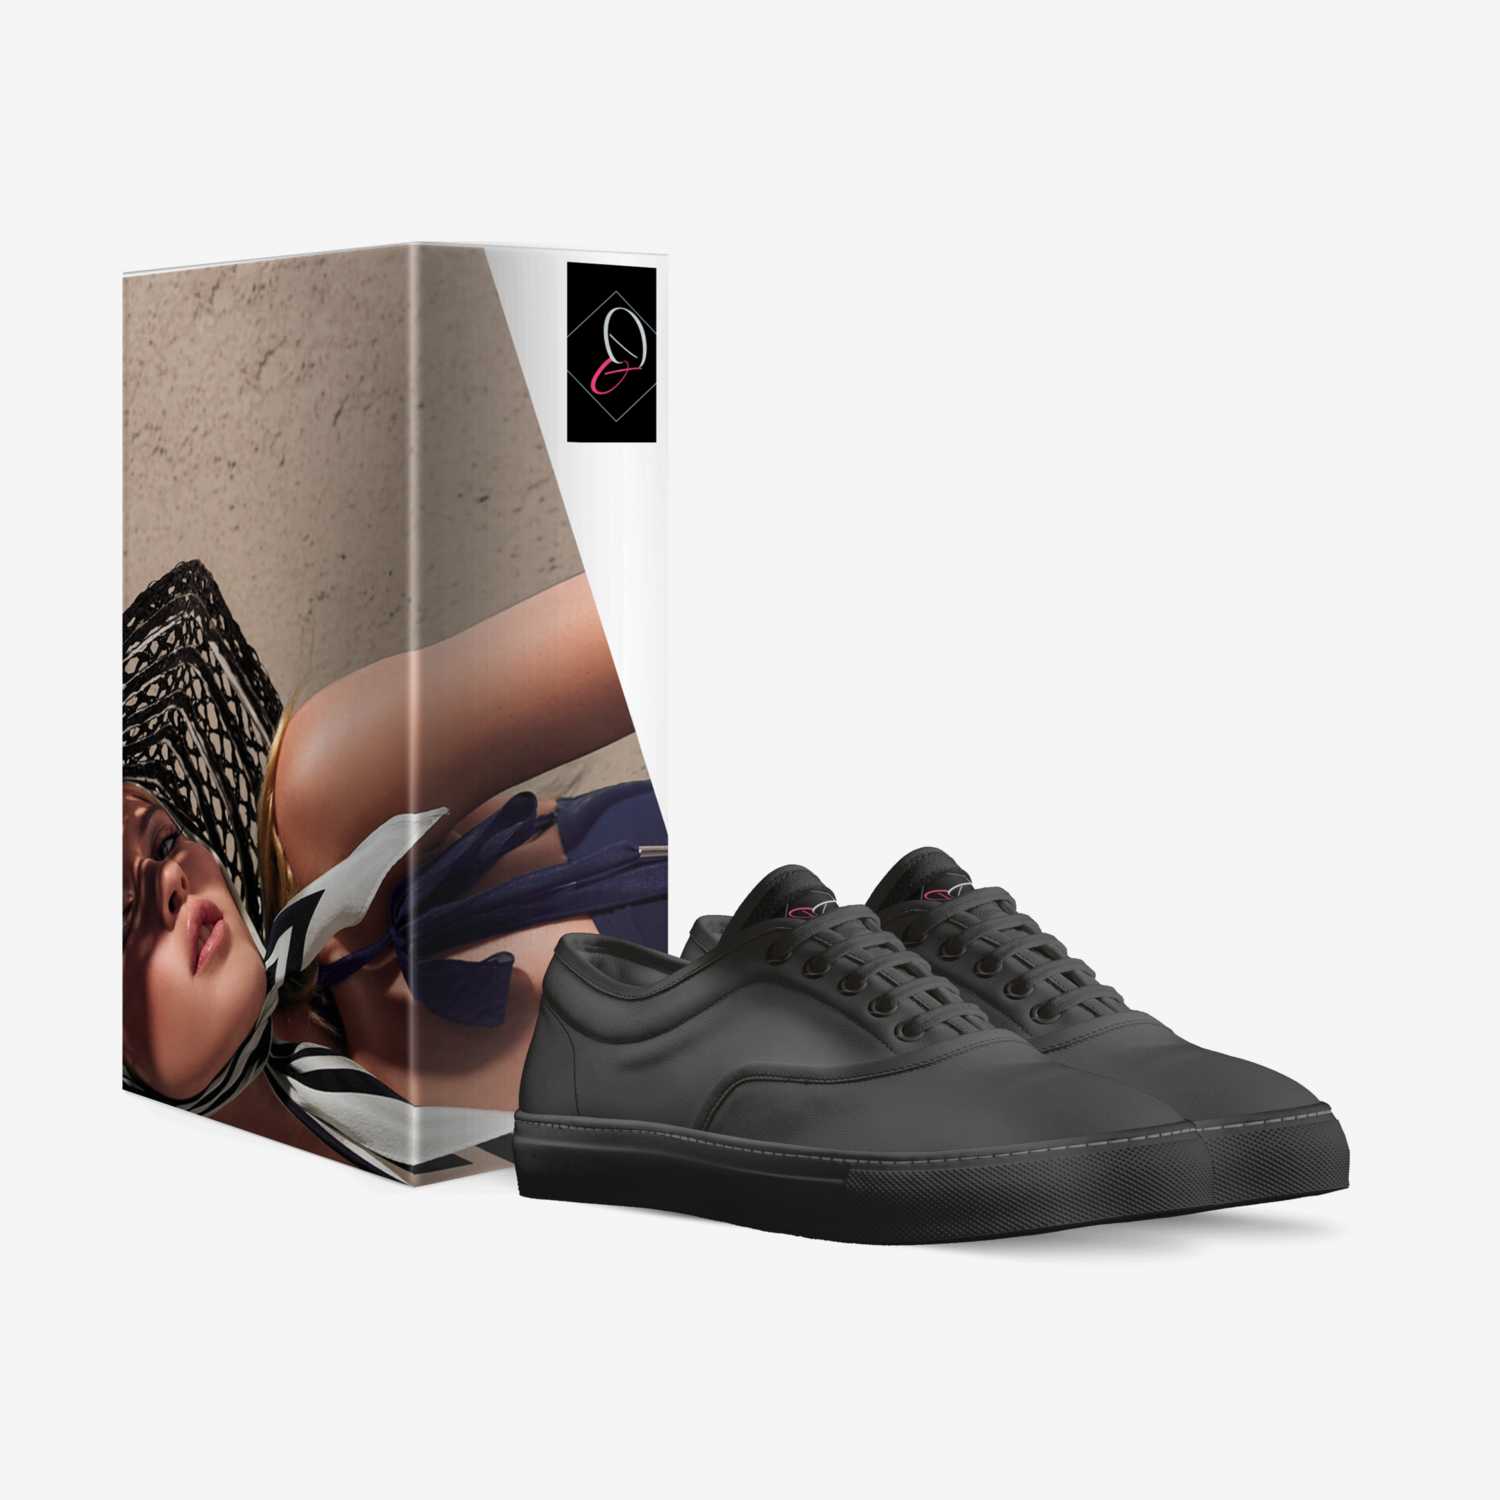 Dp custom made in Italy shoes by Ldv Ldv | Box view